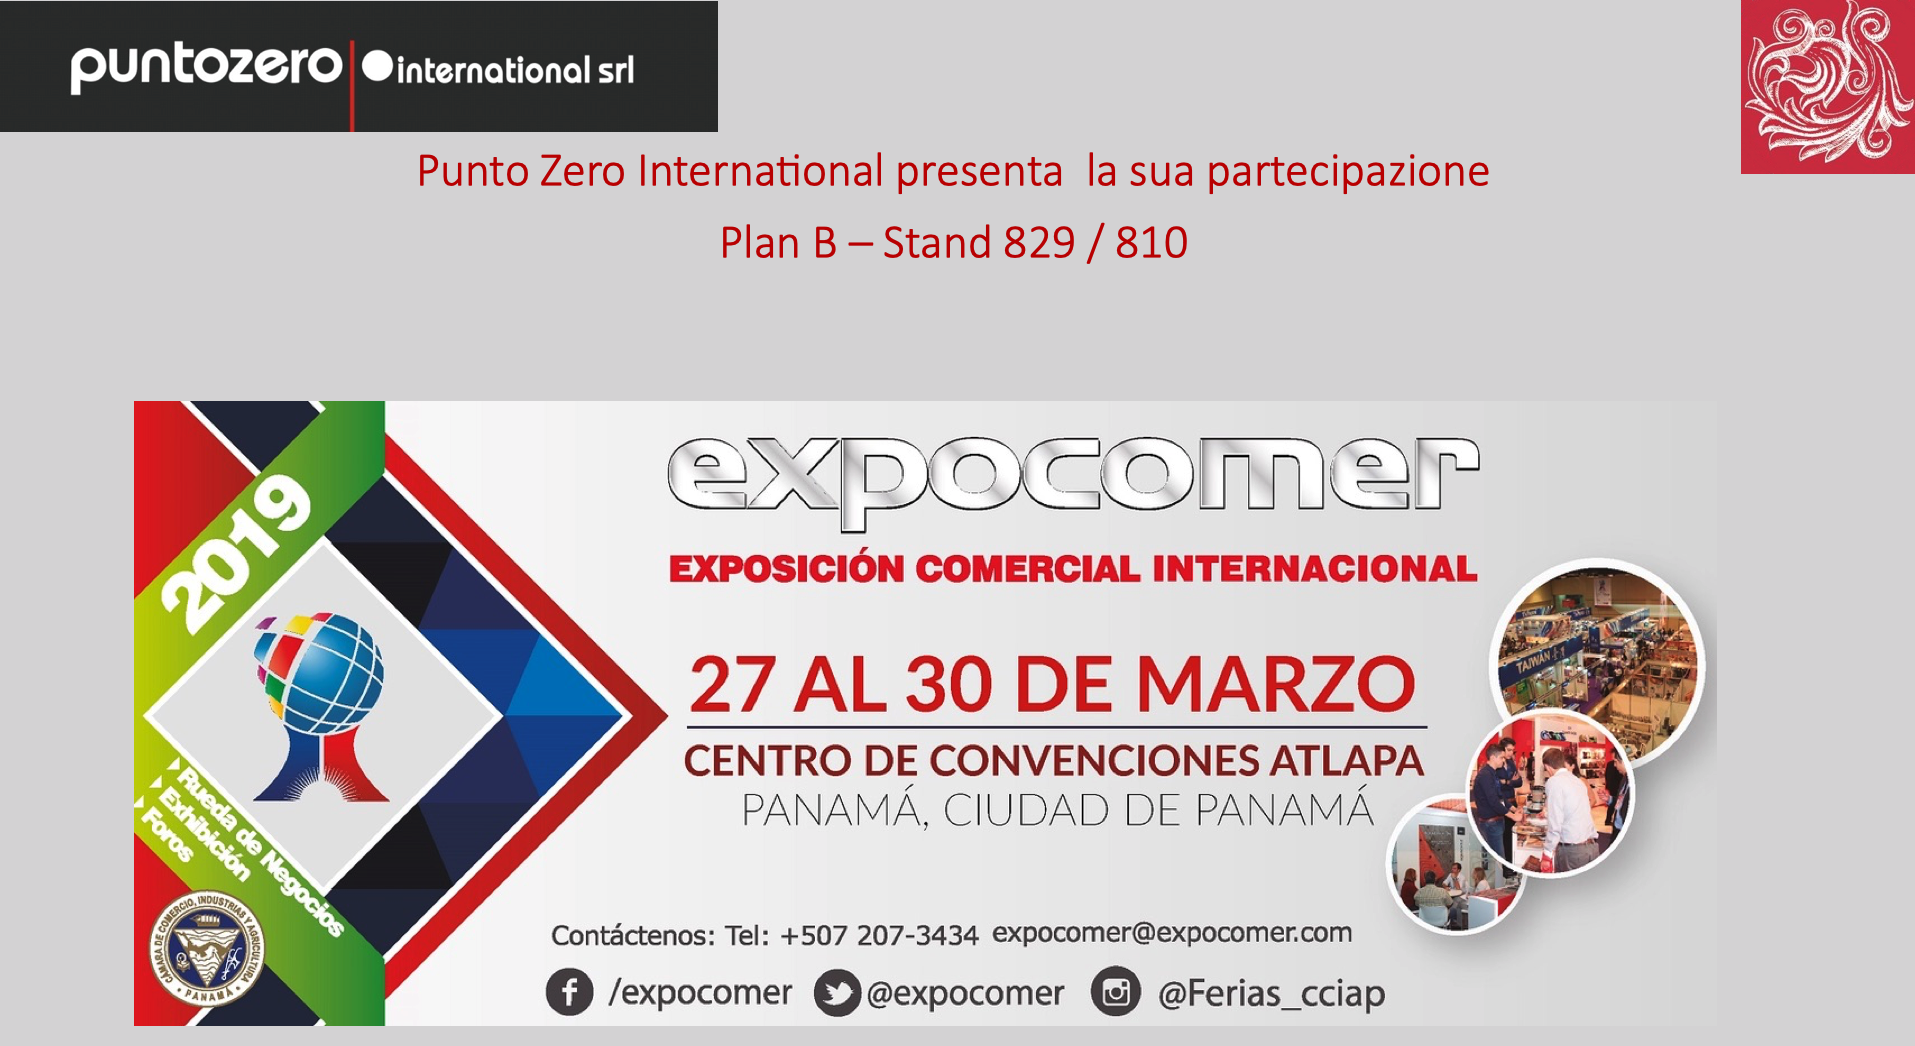 Hireo a Expocomer a Panama - 27/30.03.2019